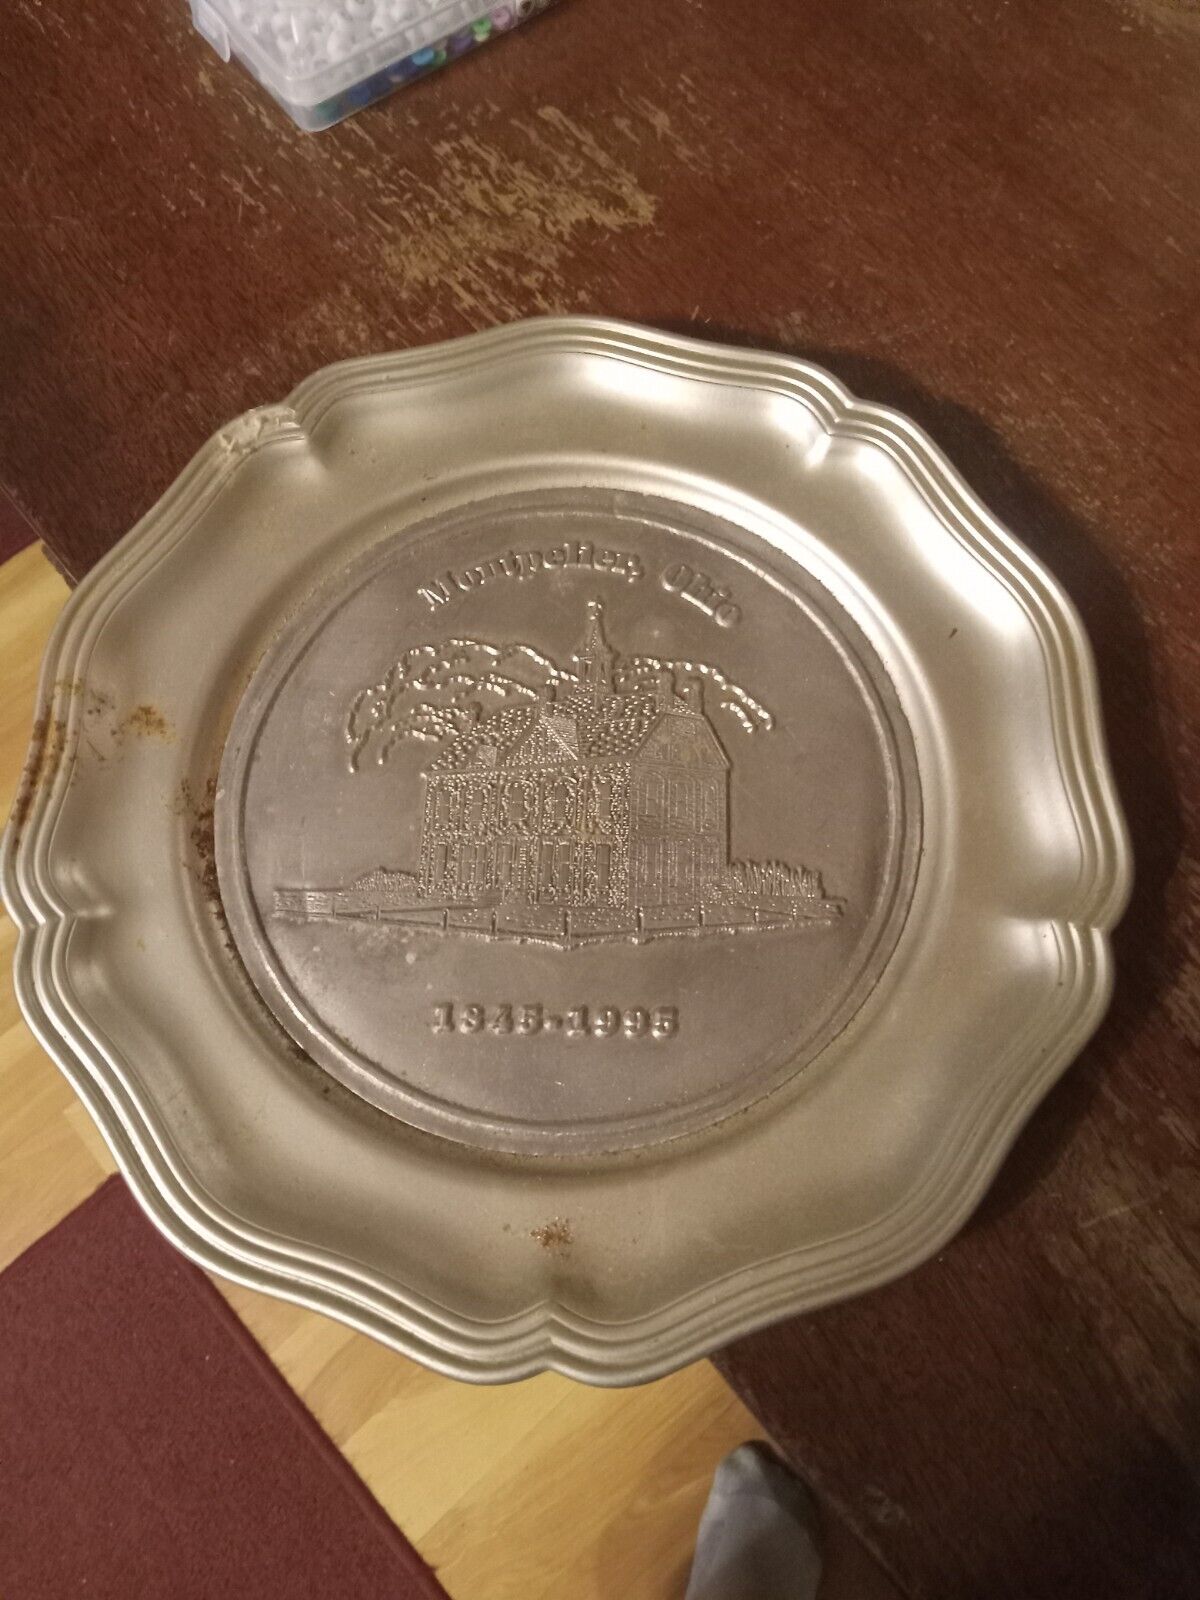 Montpelier Ohio 150 Year Commemorative Embossed Plate